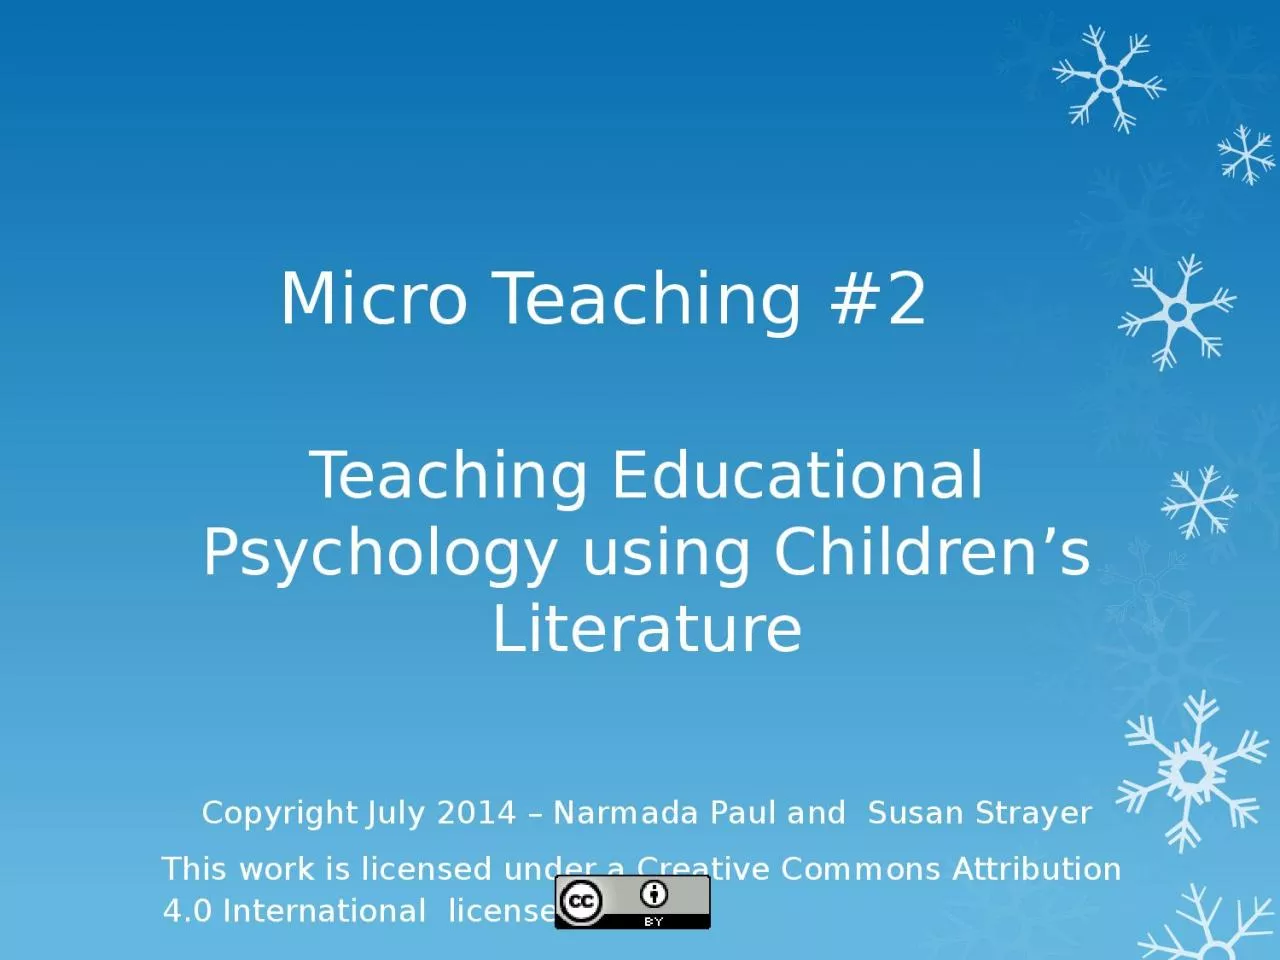 Micro Teaching #2 Teaching Educational Psychology using Children’s